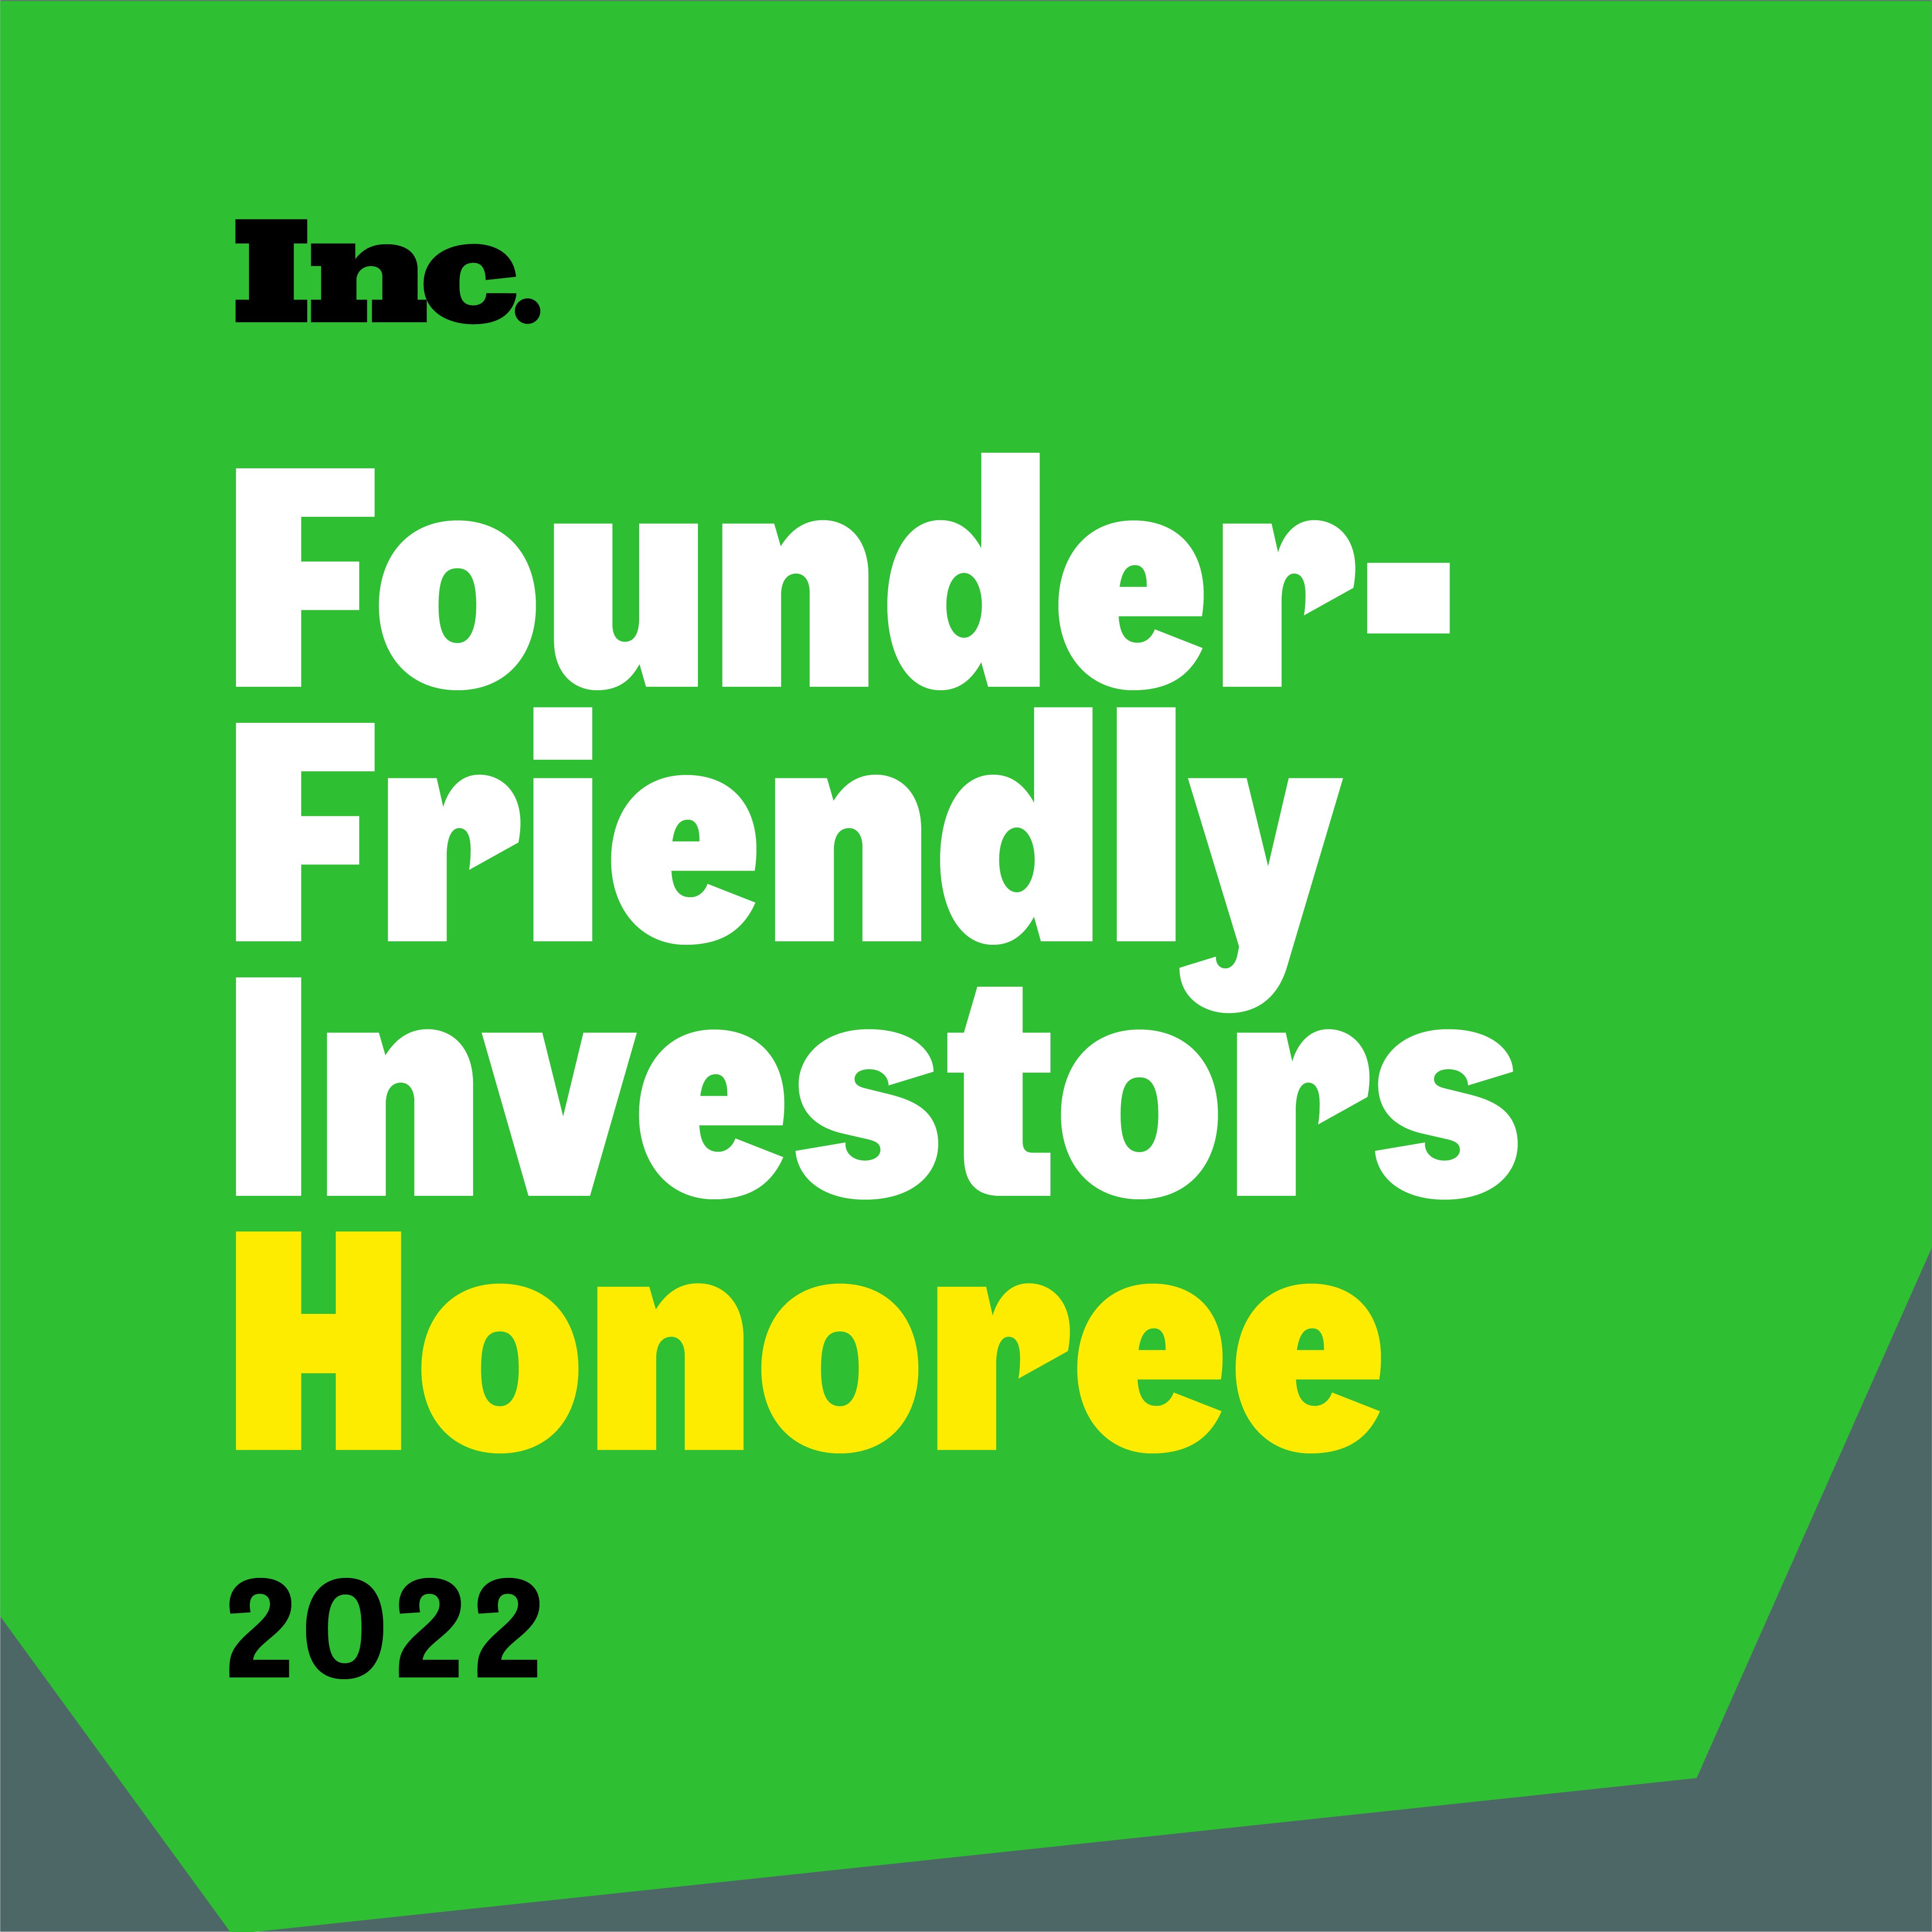 Inc. Founder Friendly Investors Honoree 2022